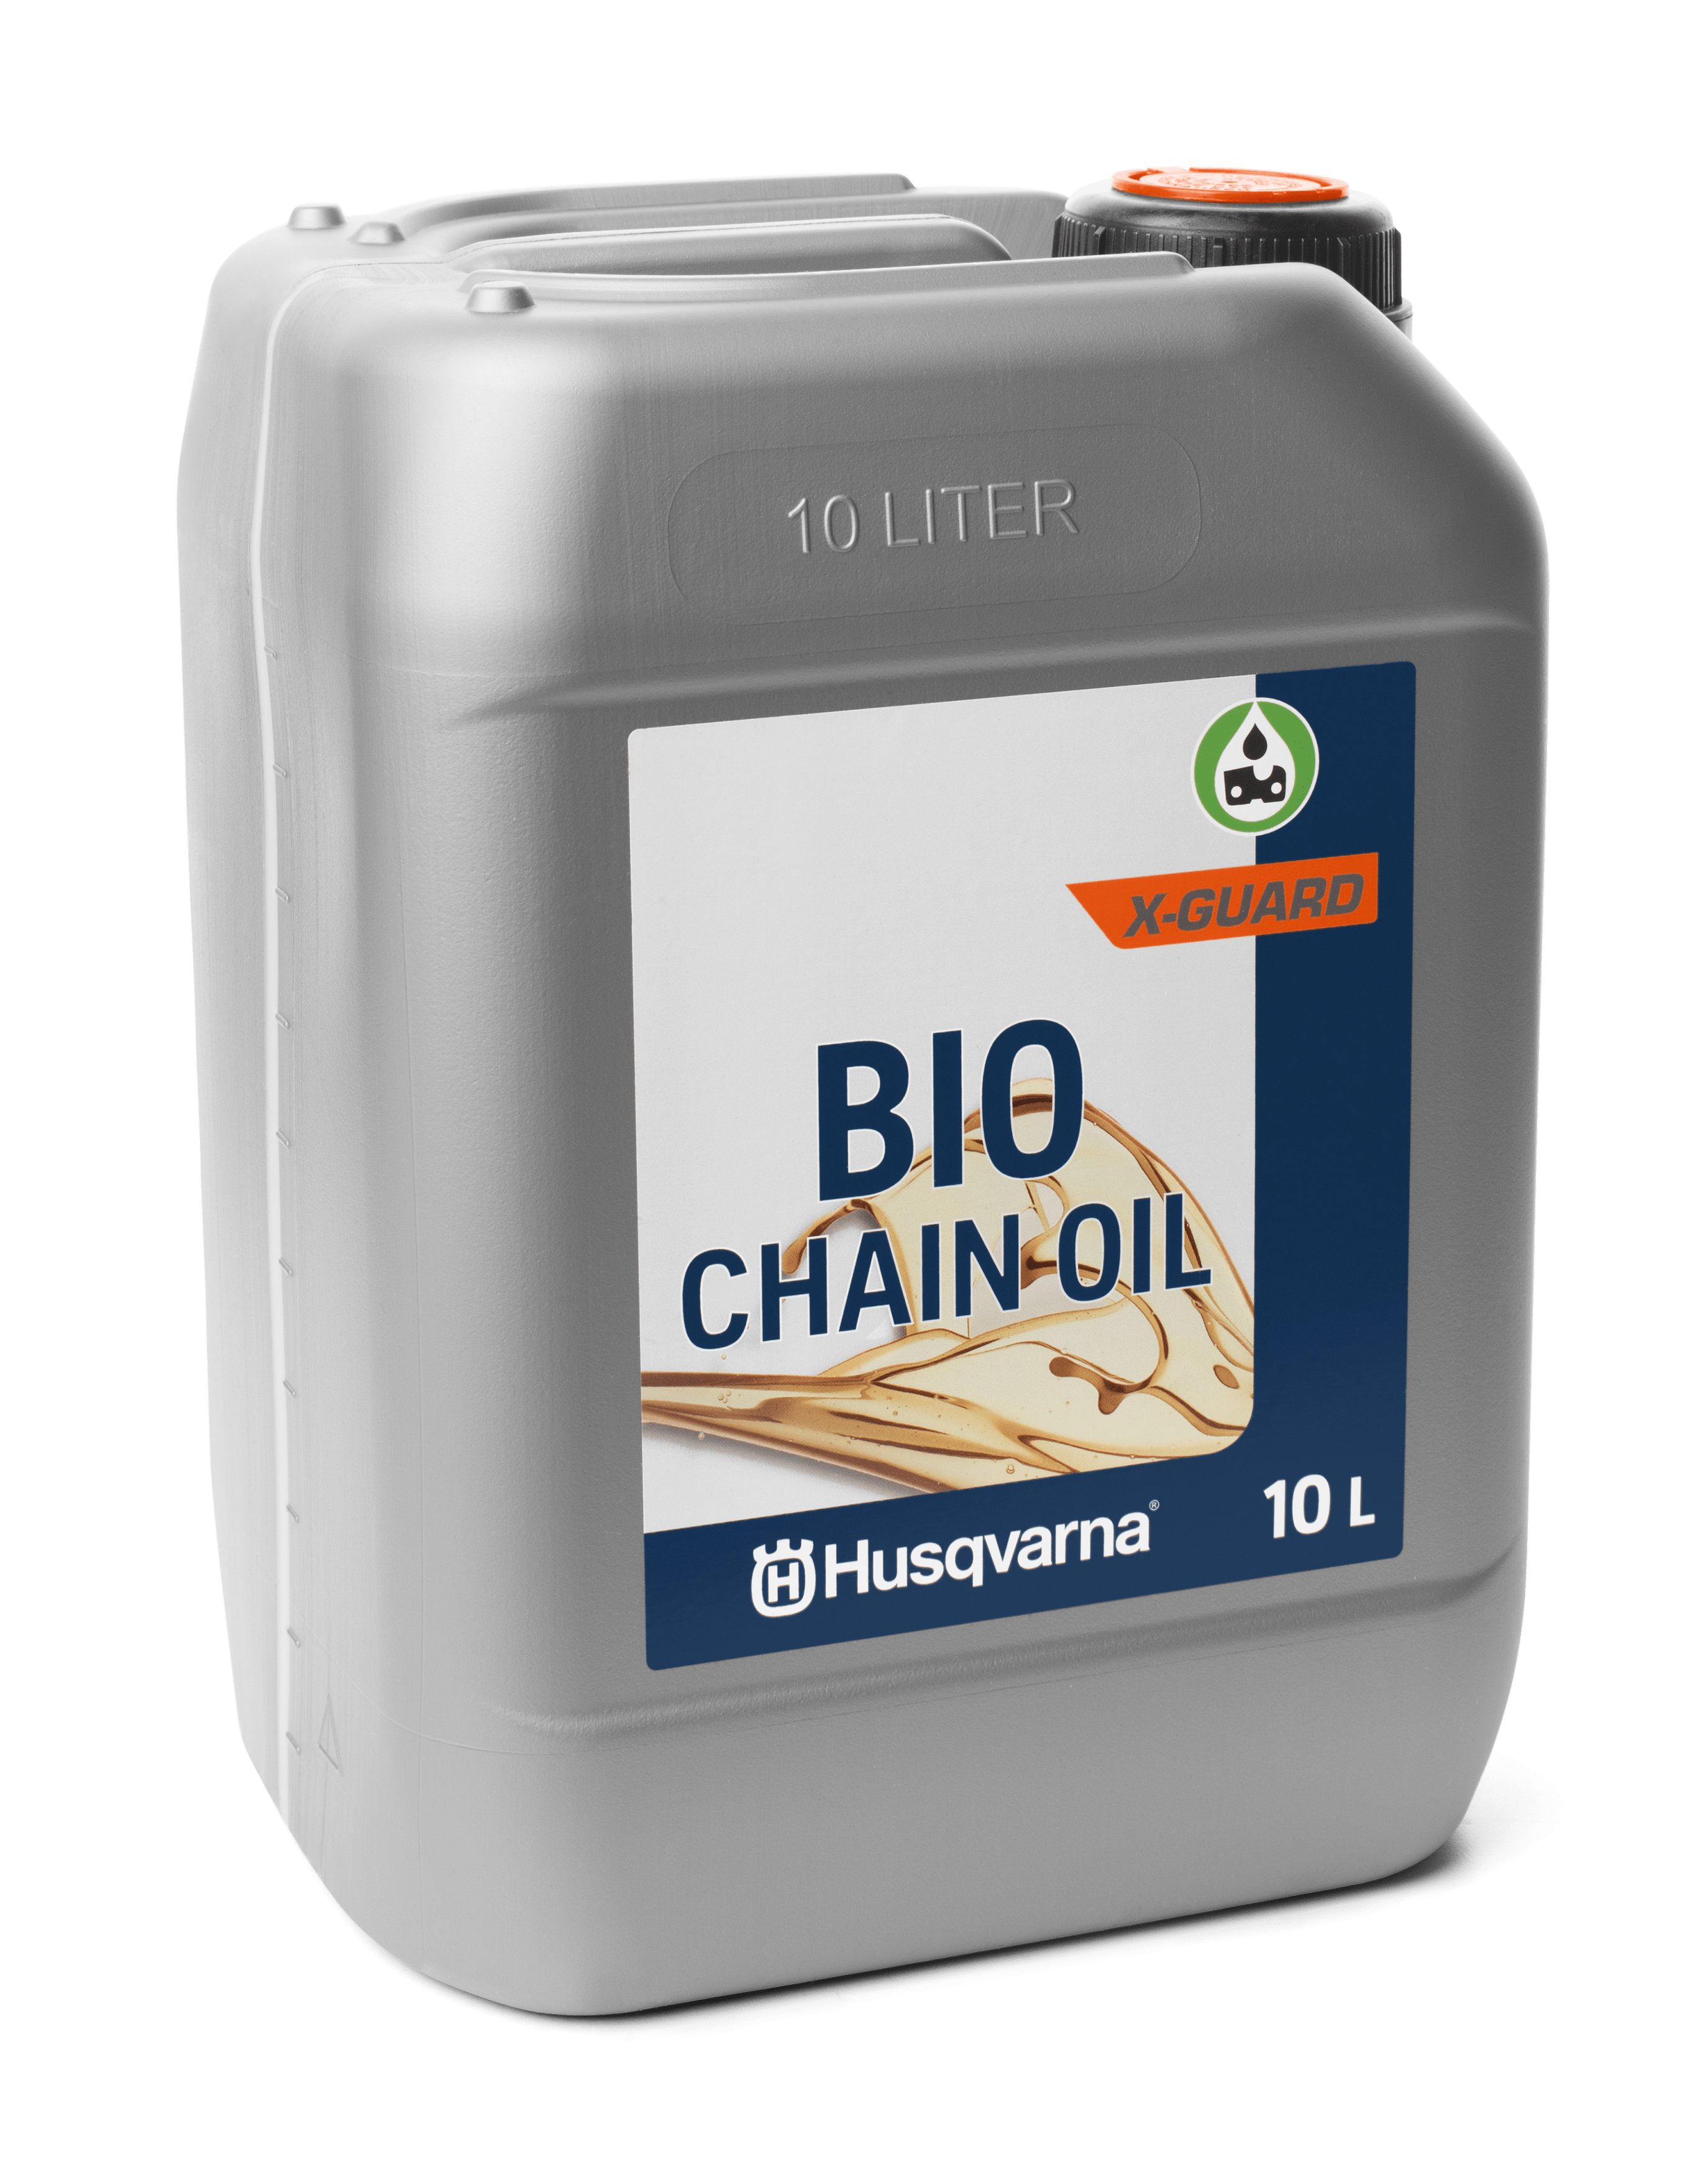 Bio Chain oil 10 liter